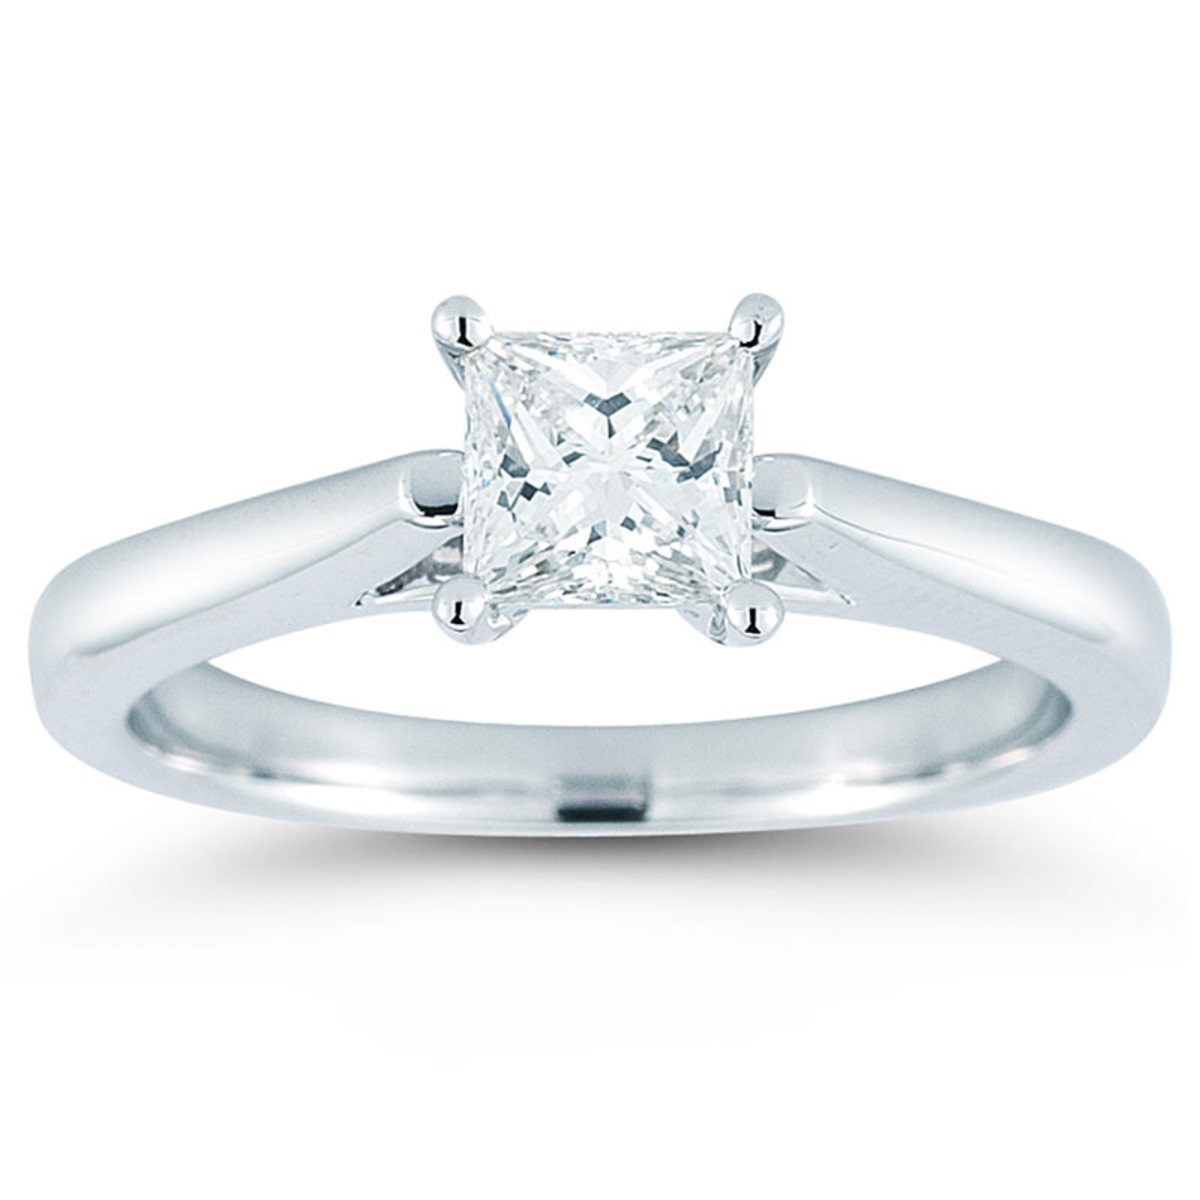 1.0ct Princess Cut Diamond Solitaire Ring, Platinum